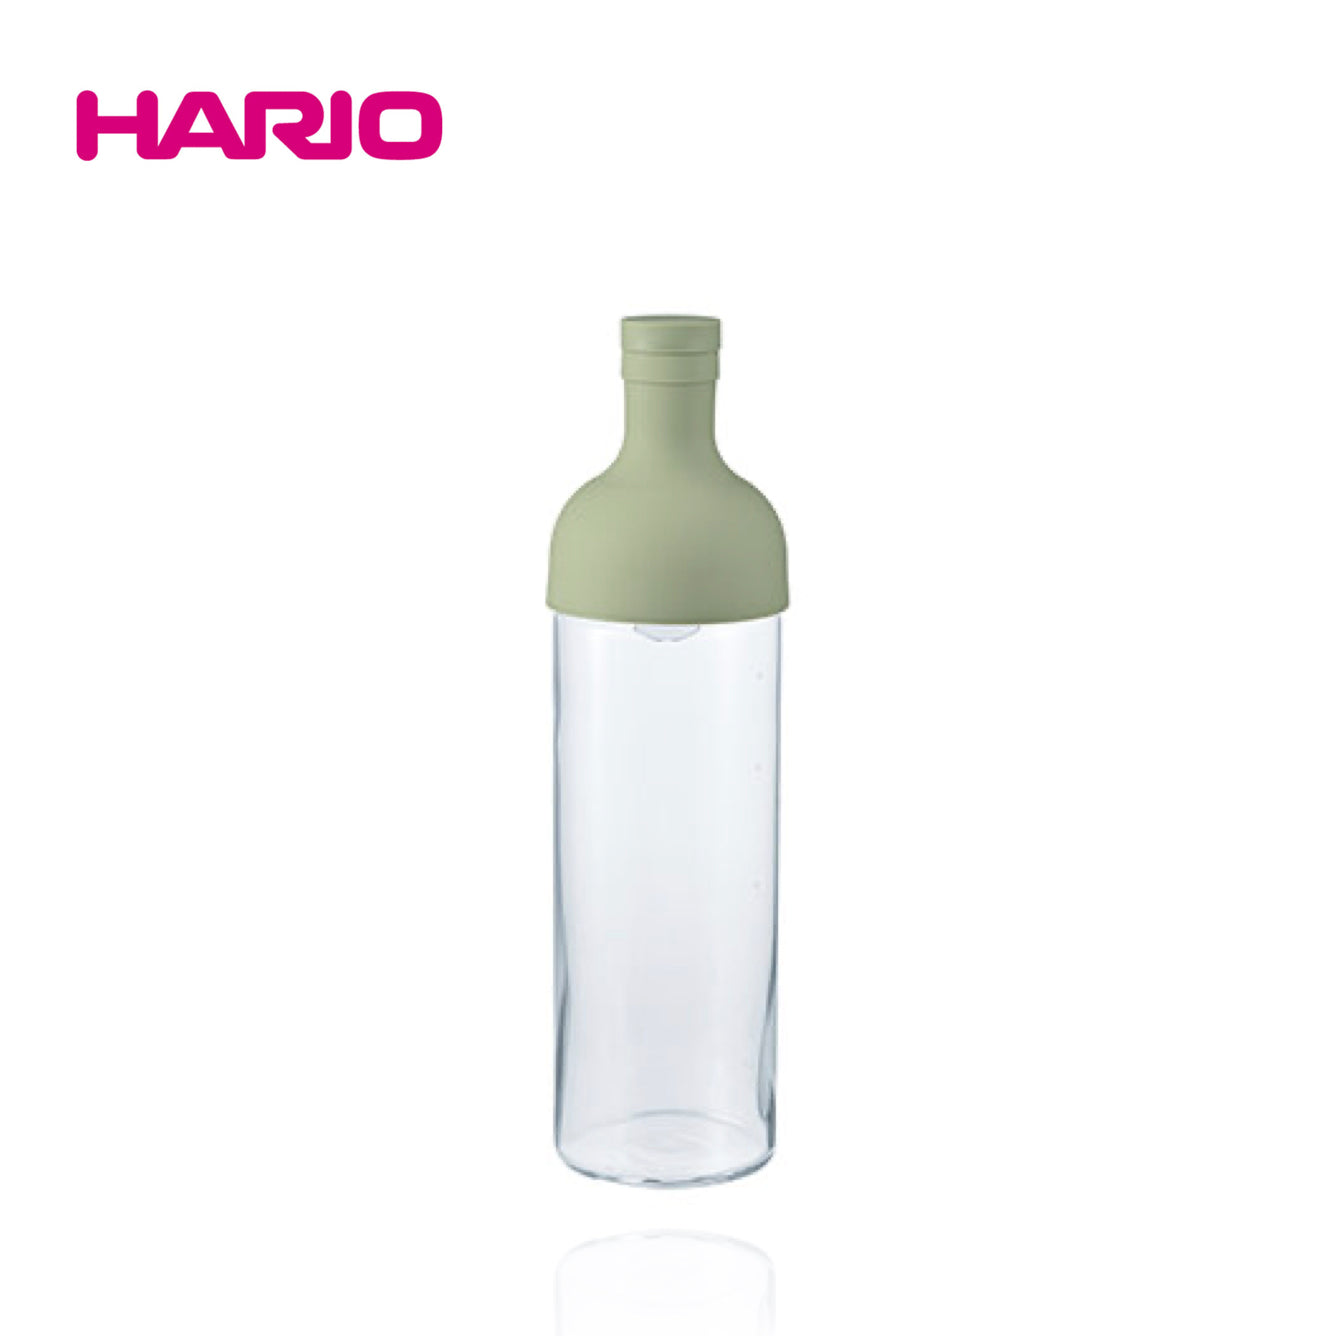 Hario Cold Brew Filter-in Tea Bottle smoky green